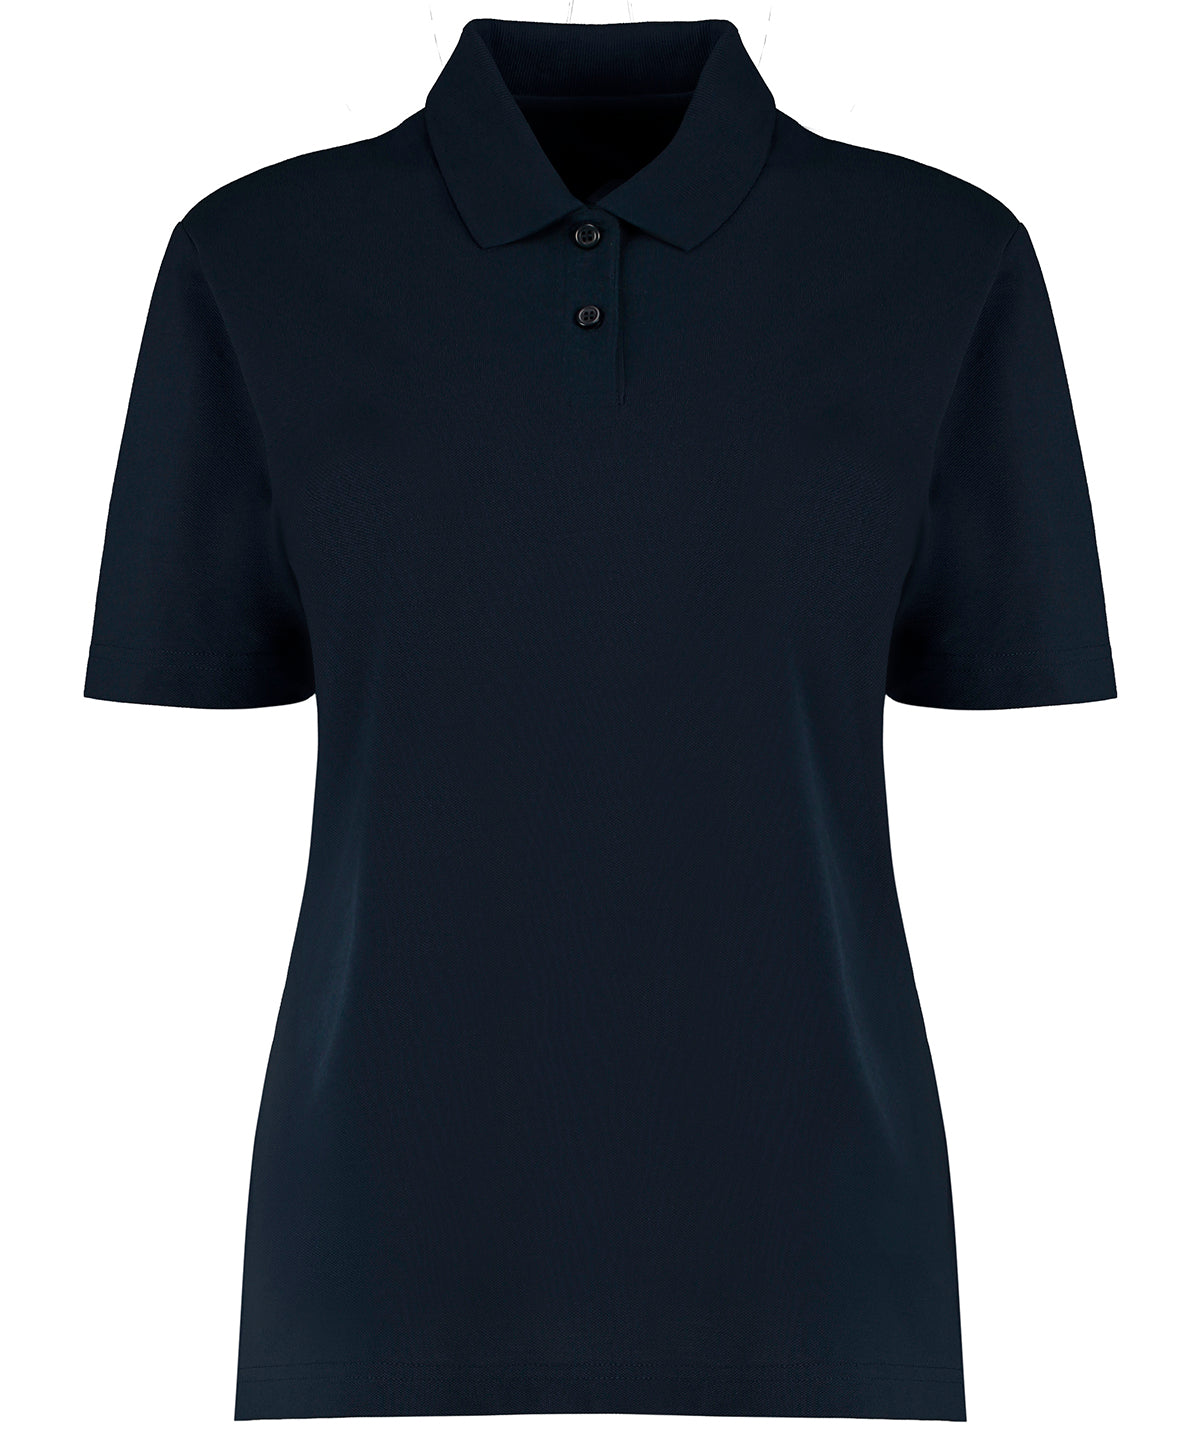 Personalised Polo Shirts - Black Kustom Kit Women's workforce polo (regular fit)